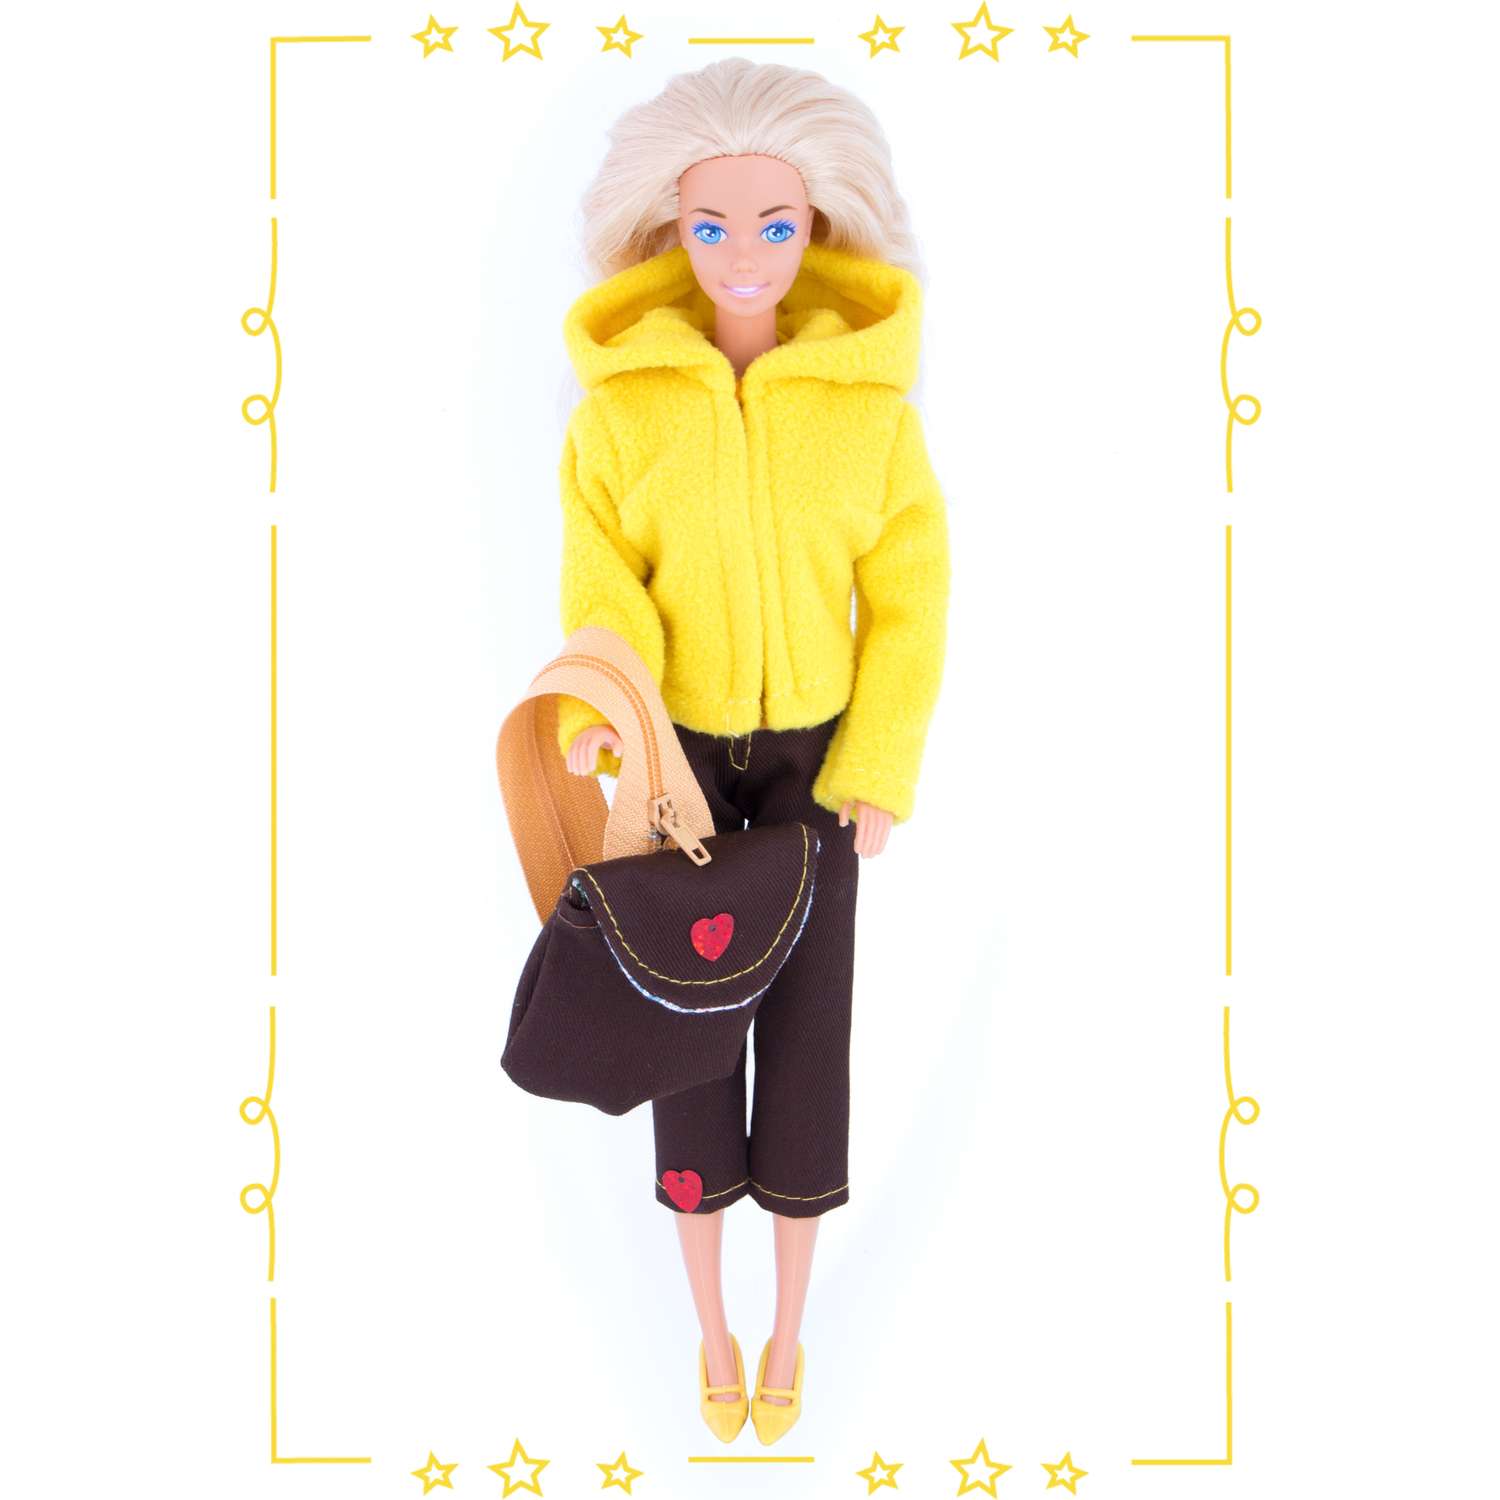 Набор одежды Модница для куклы 29 см 9999 желтый 9999желтый&amp;коричневый - фото 1